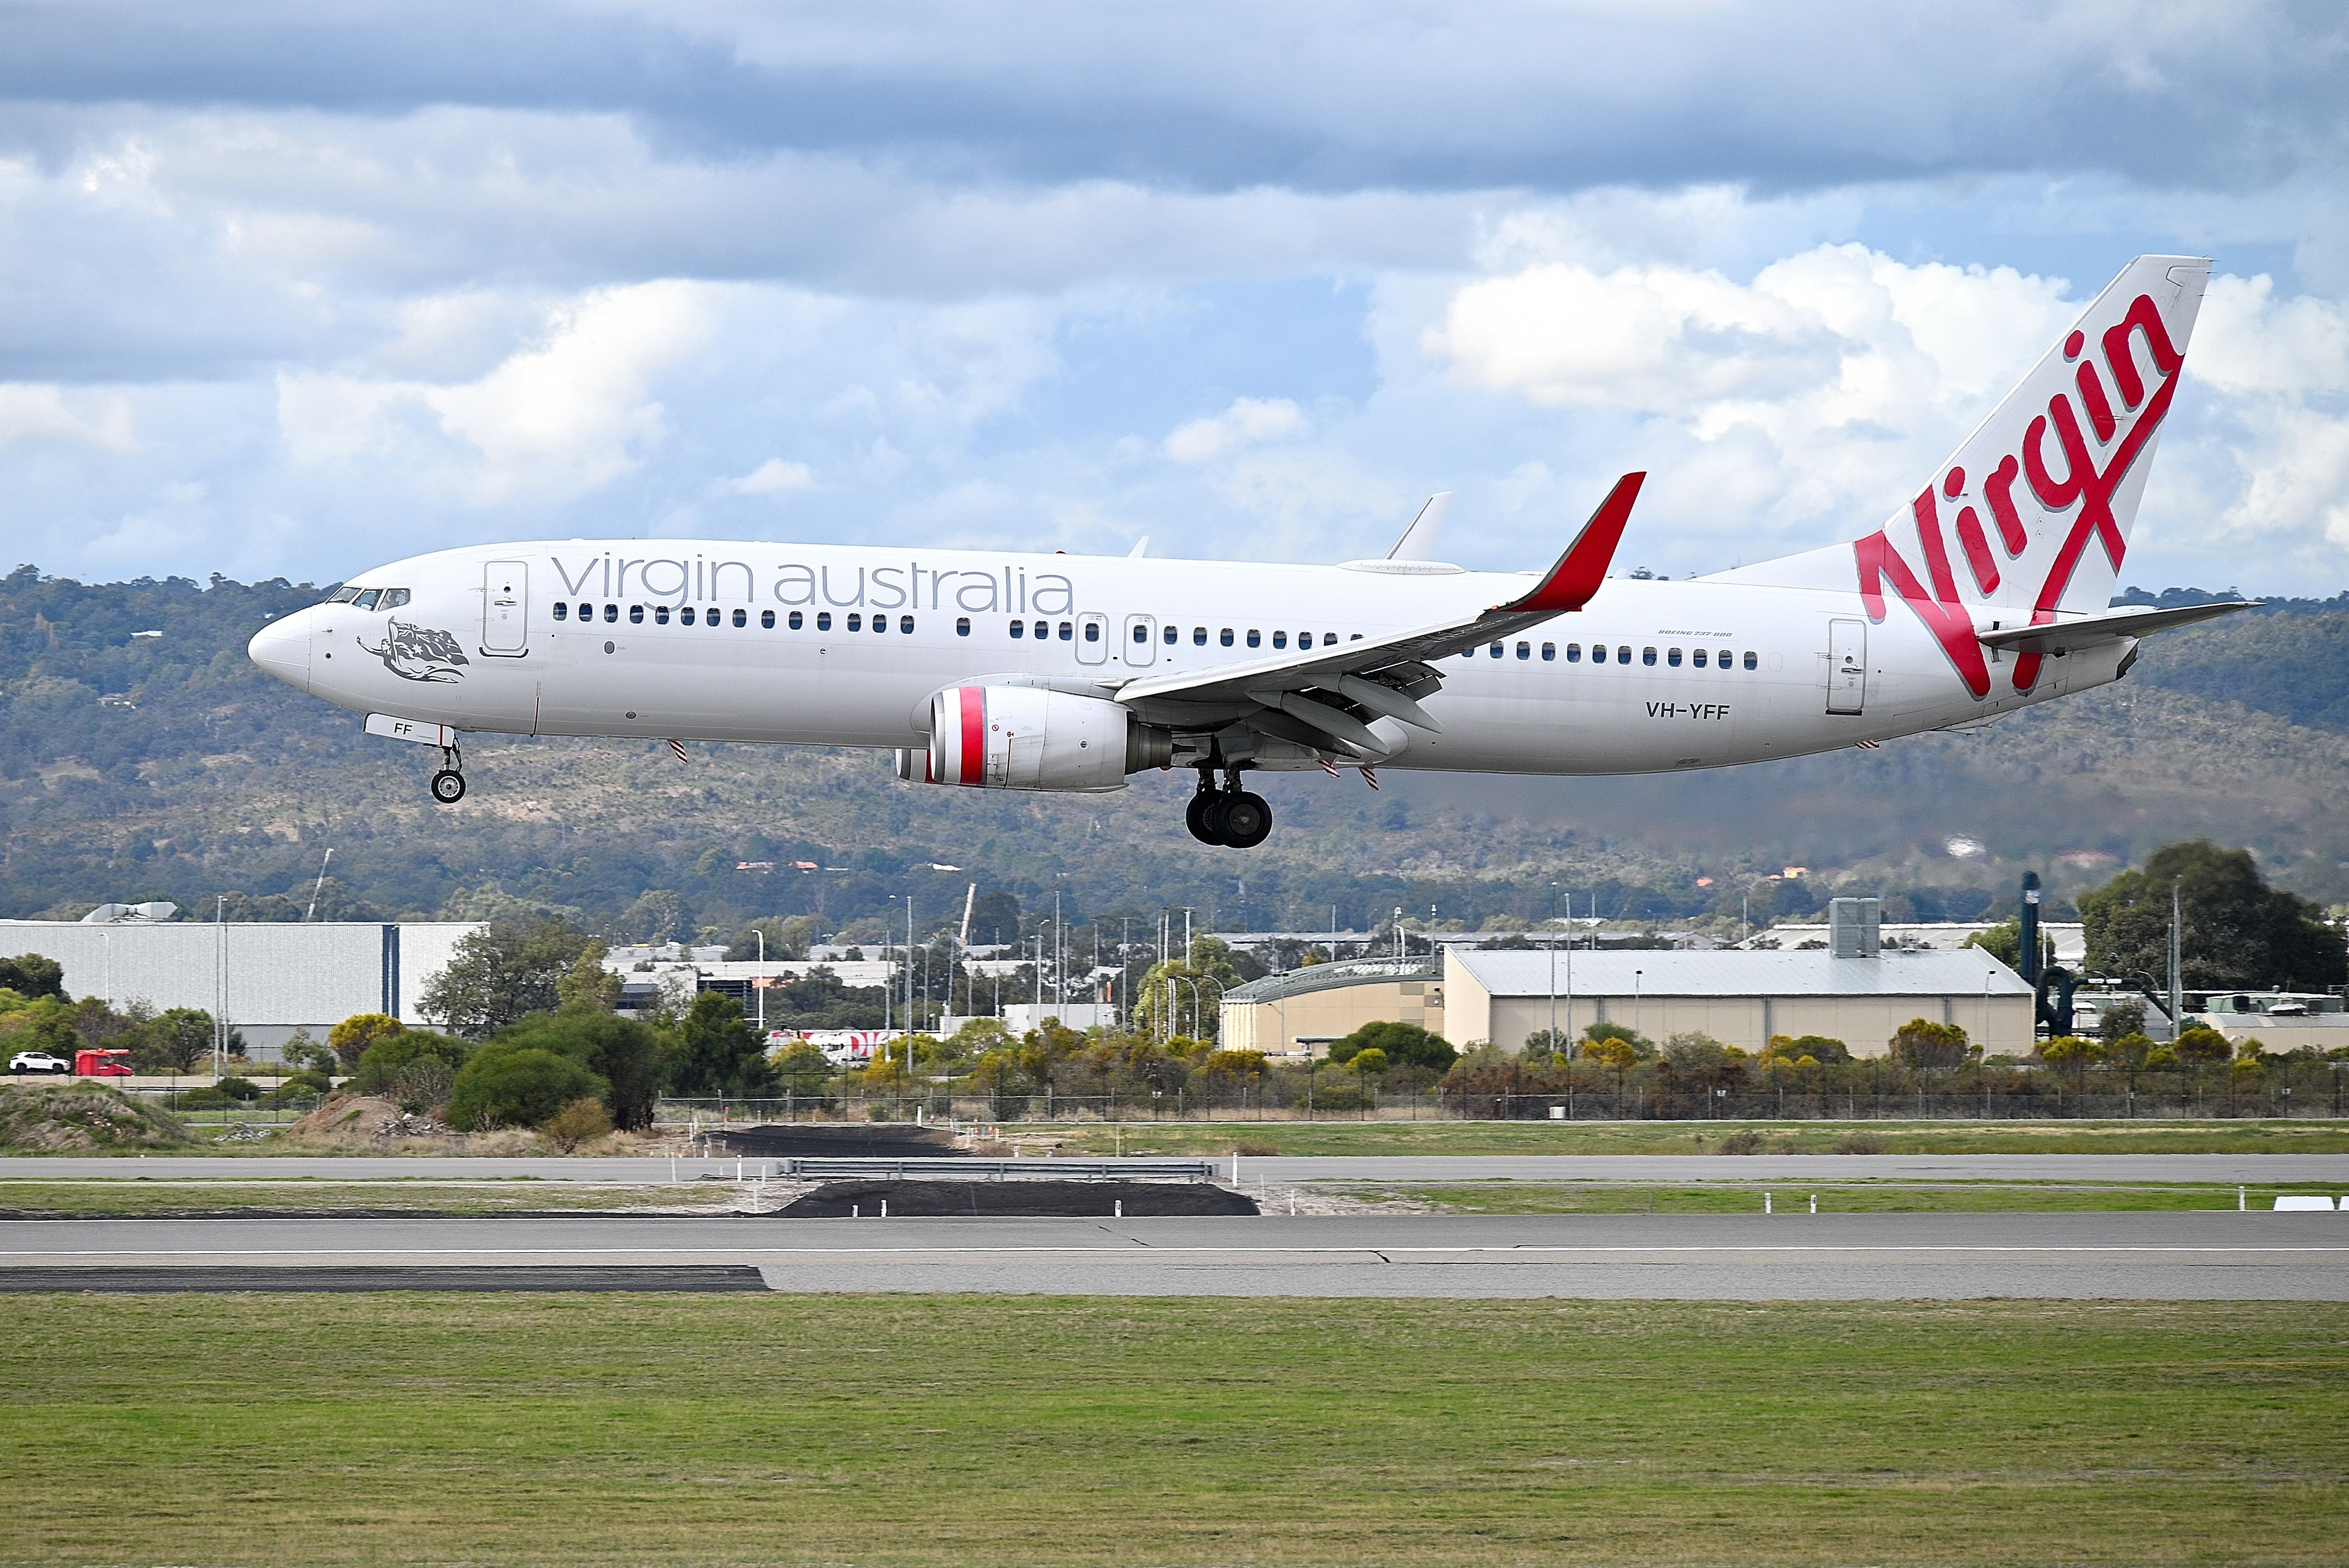 A Virgin Australia plane landing